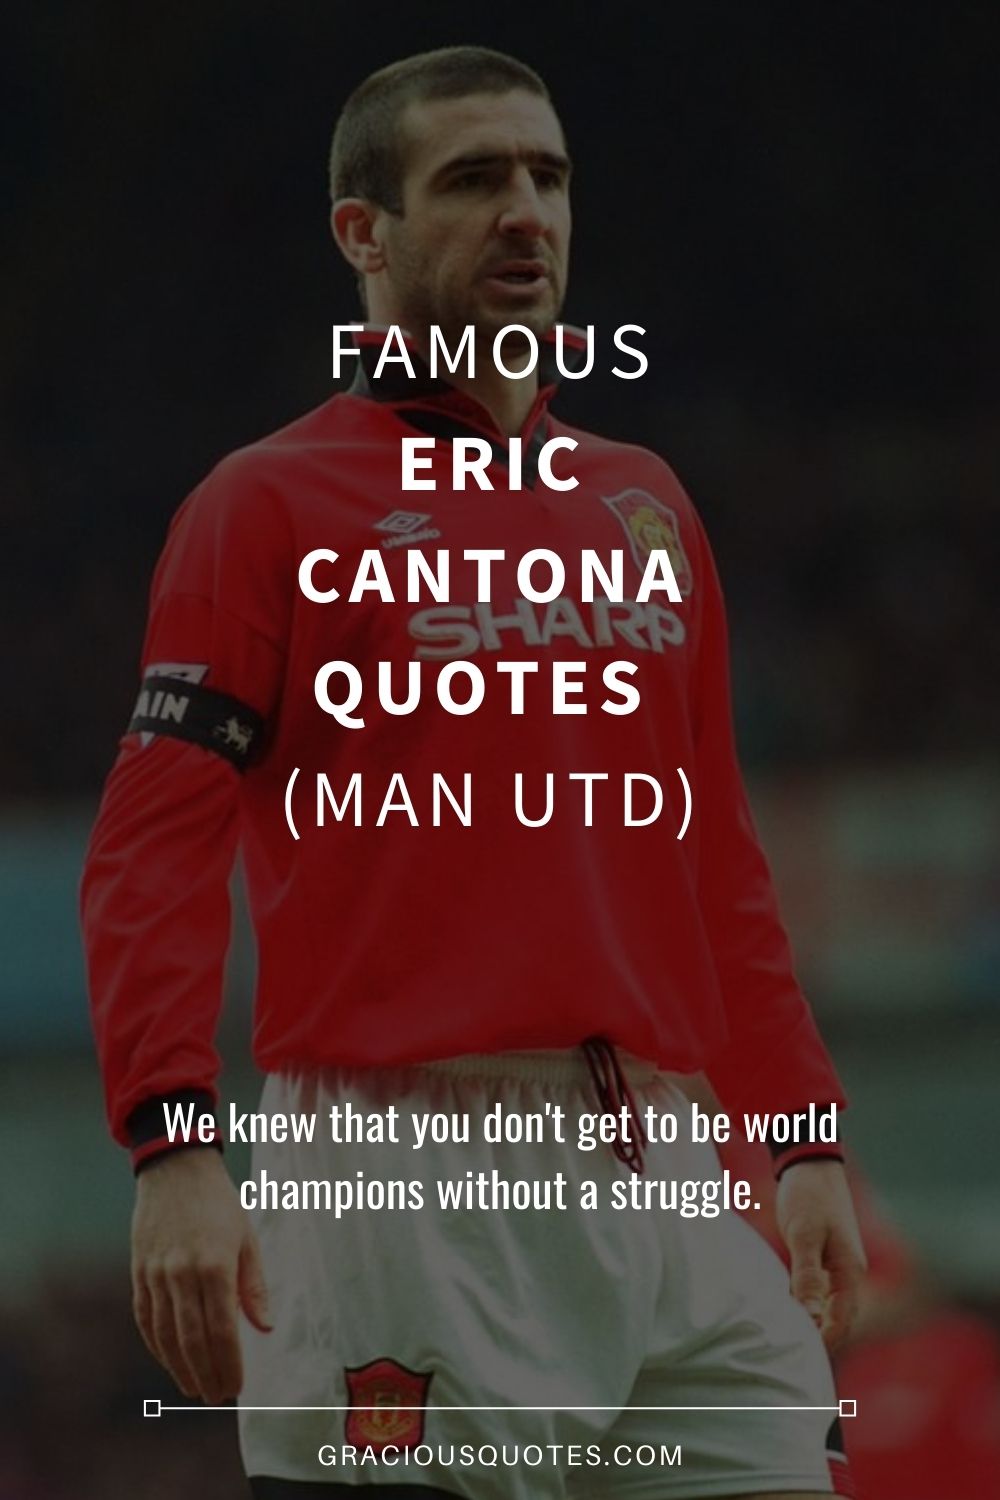 Famous Eric Cantona Quotes (MAN UTD) - Gracious Quotes